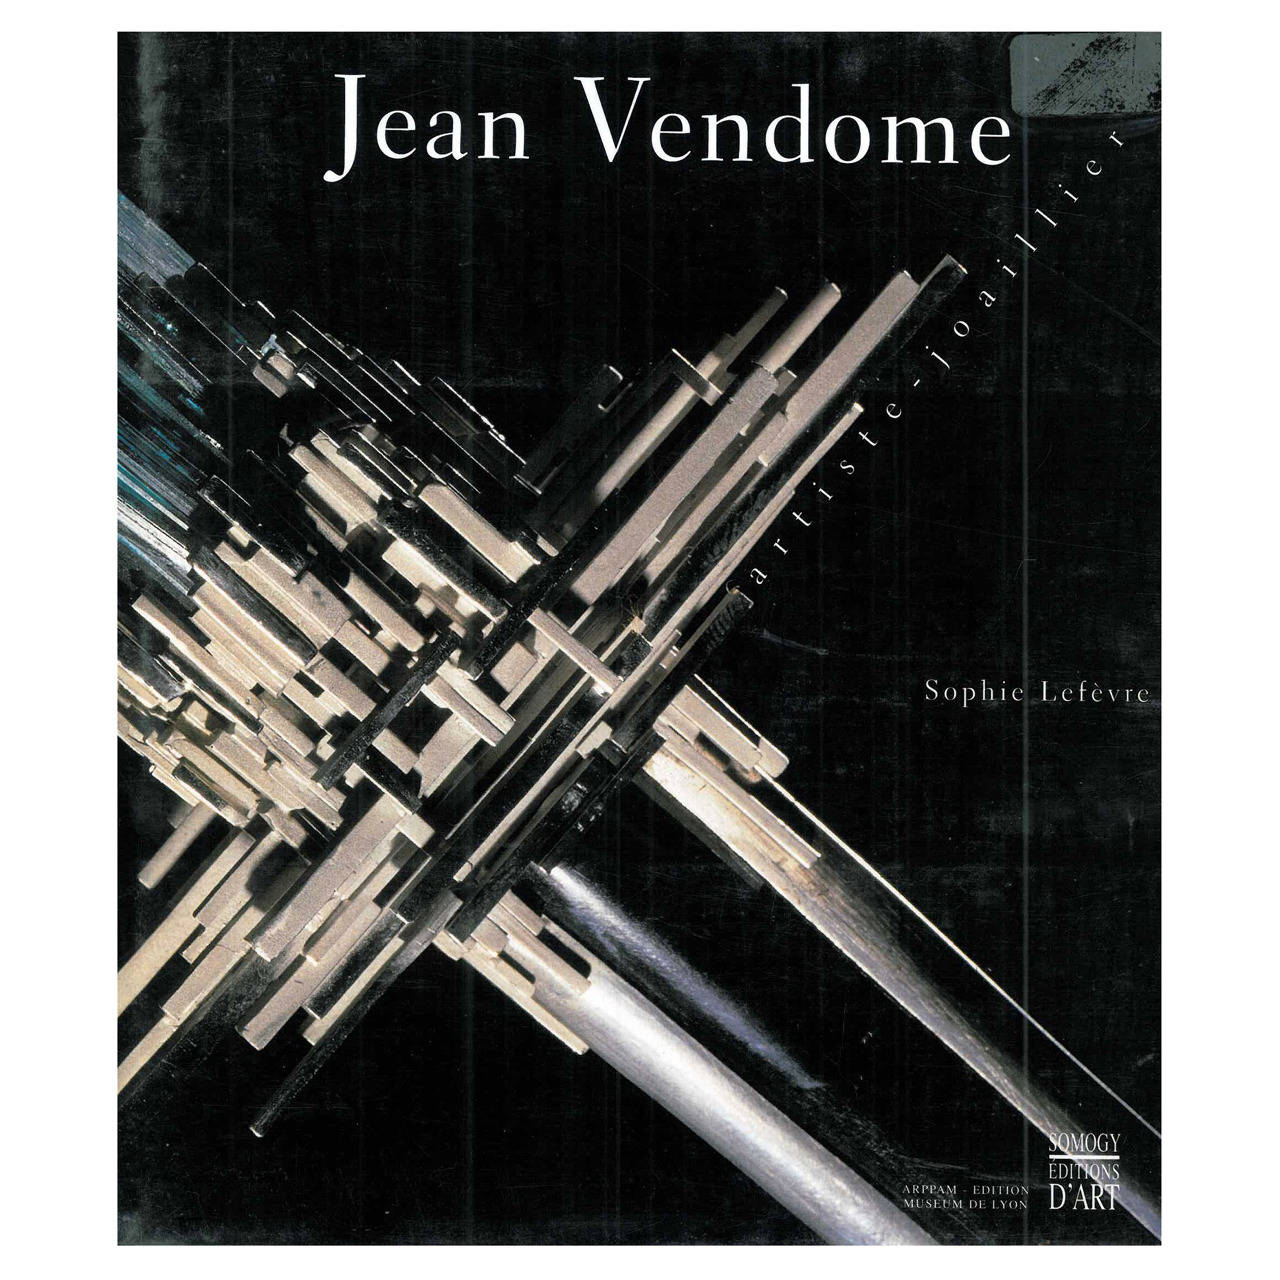 Book of Jean Vendome Artiste, Joaillier Half a Century of Creation